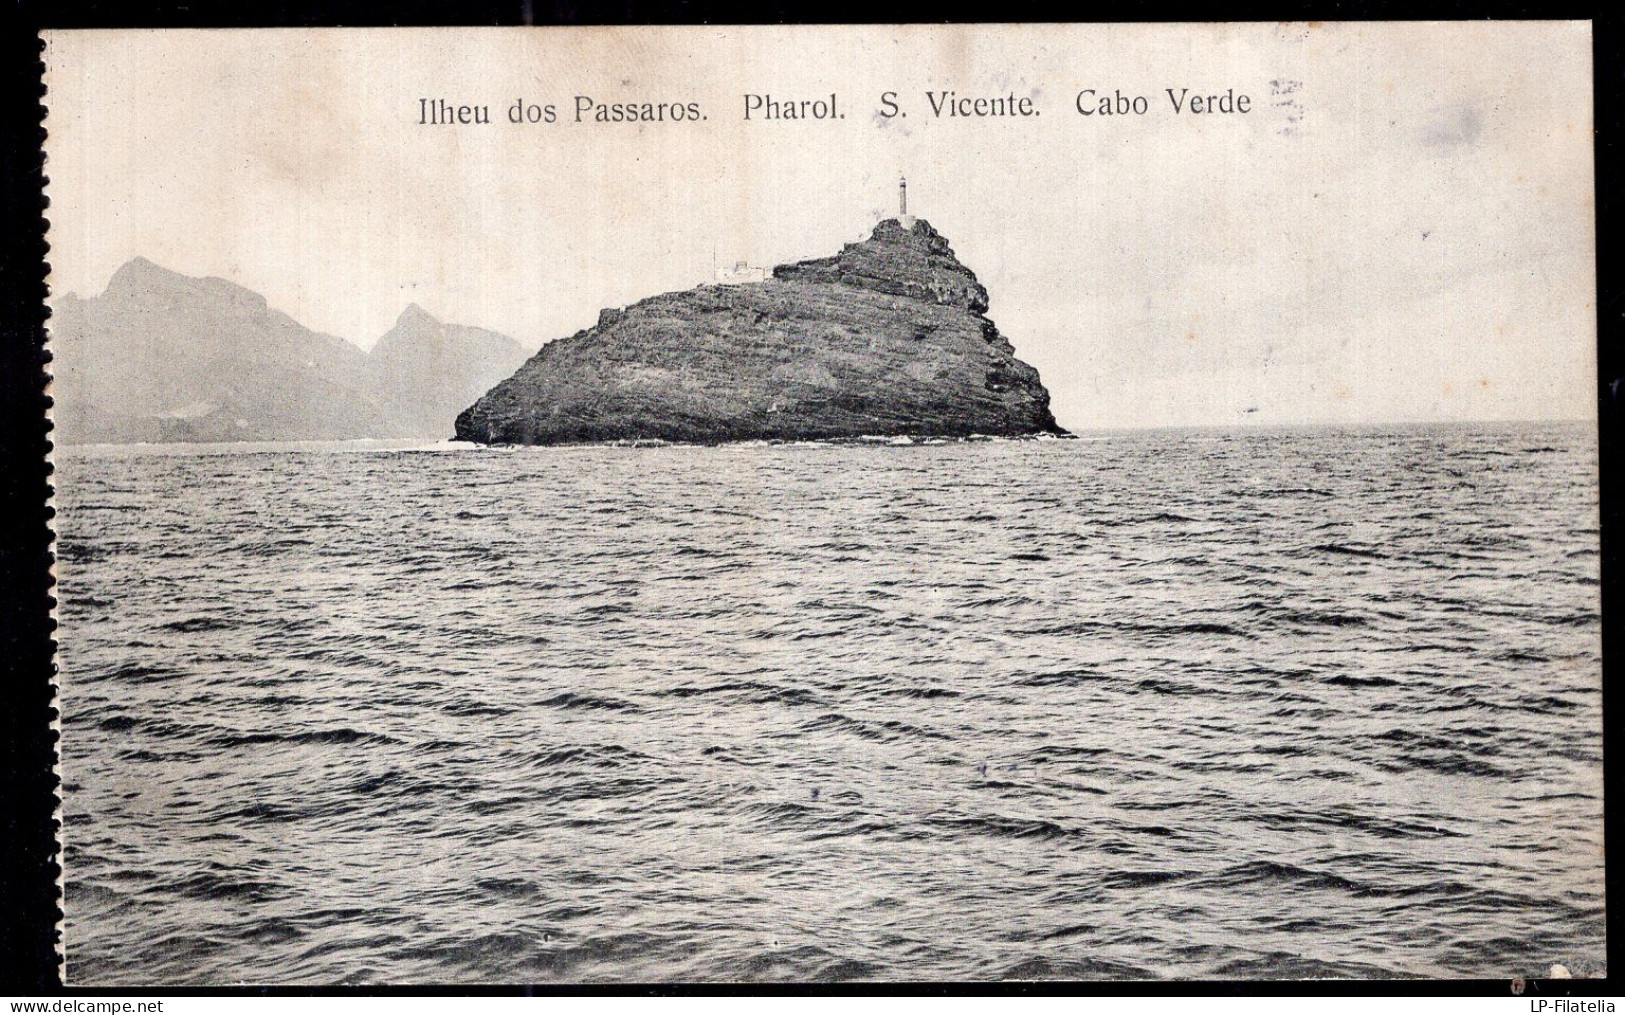 Cabo Verde - Circa 1920 - St. Vincent - Ilheu Dos Passaros - Pharol - Cap Vert